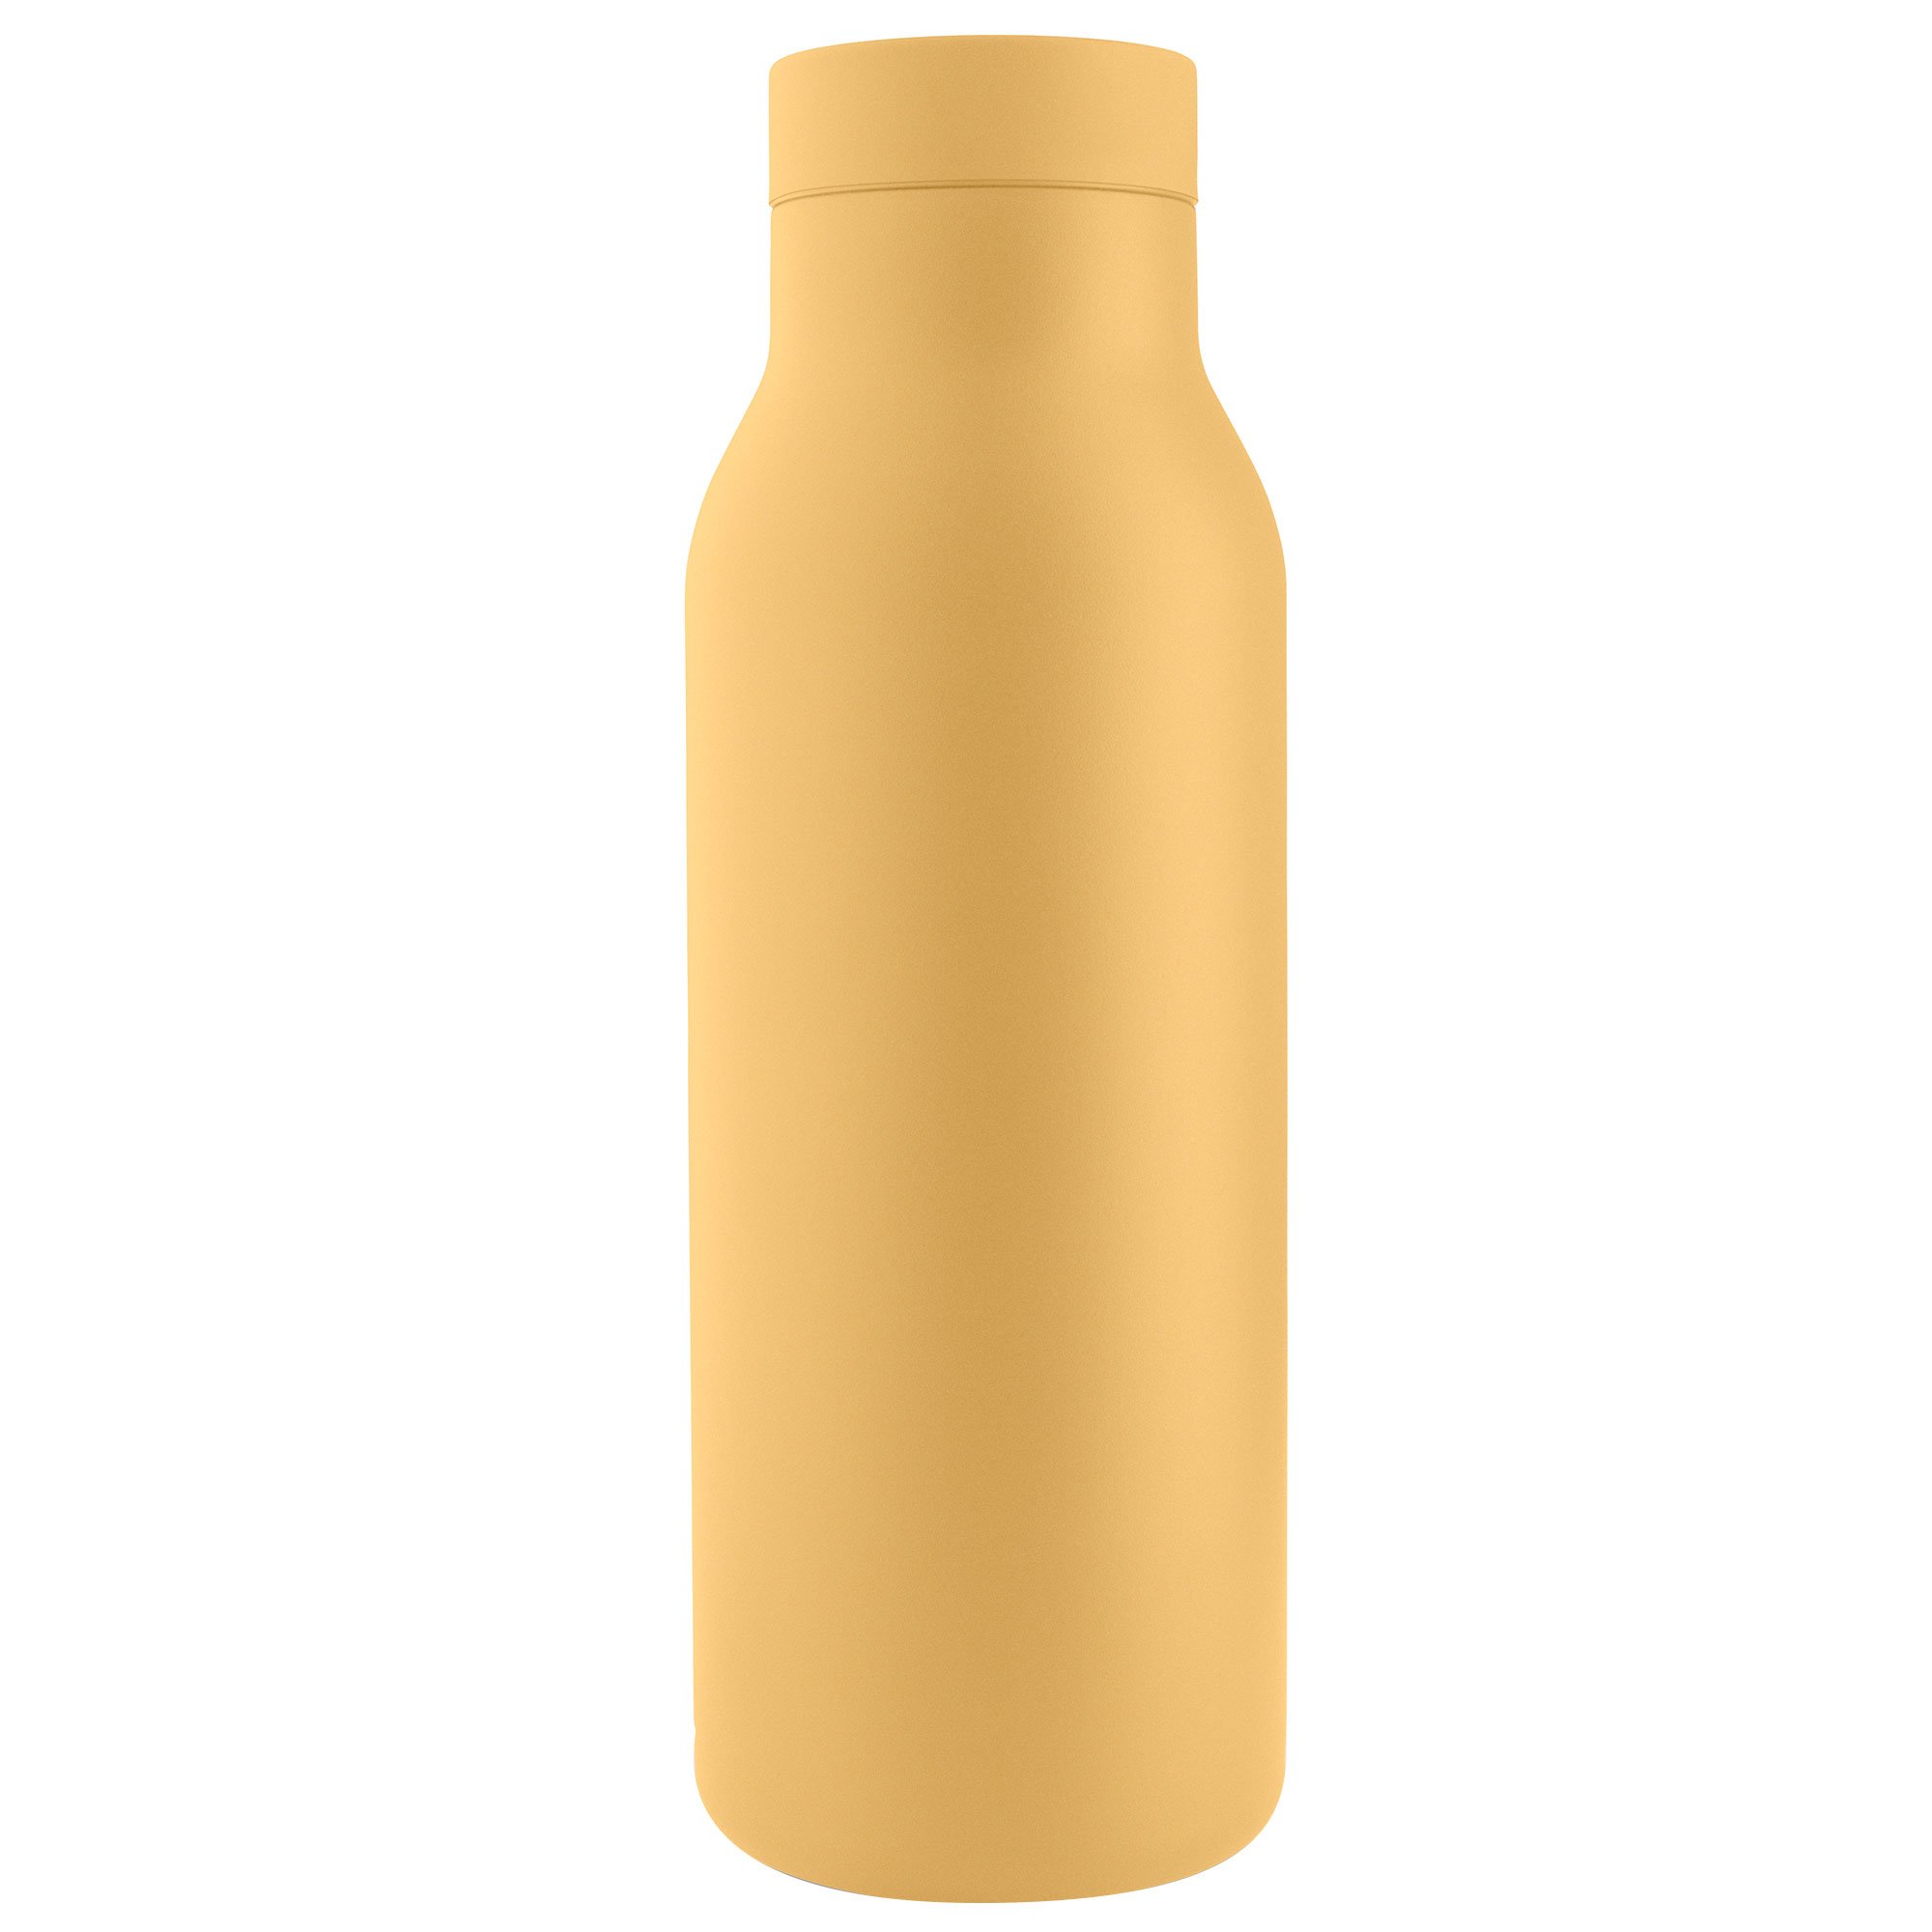 Eva Solo Urban termosflaske 0,5 liter, golden sand Termoflaske